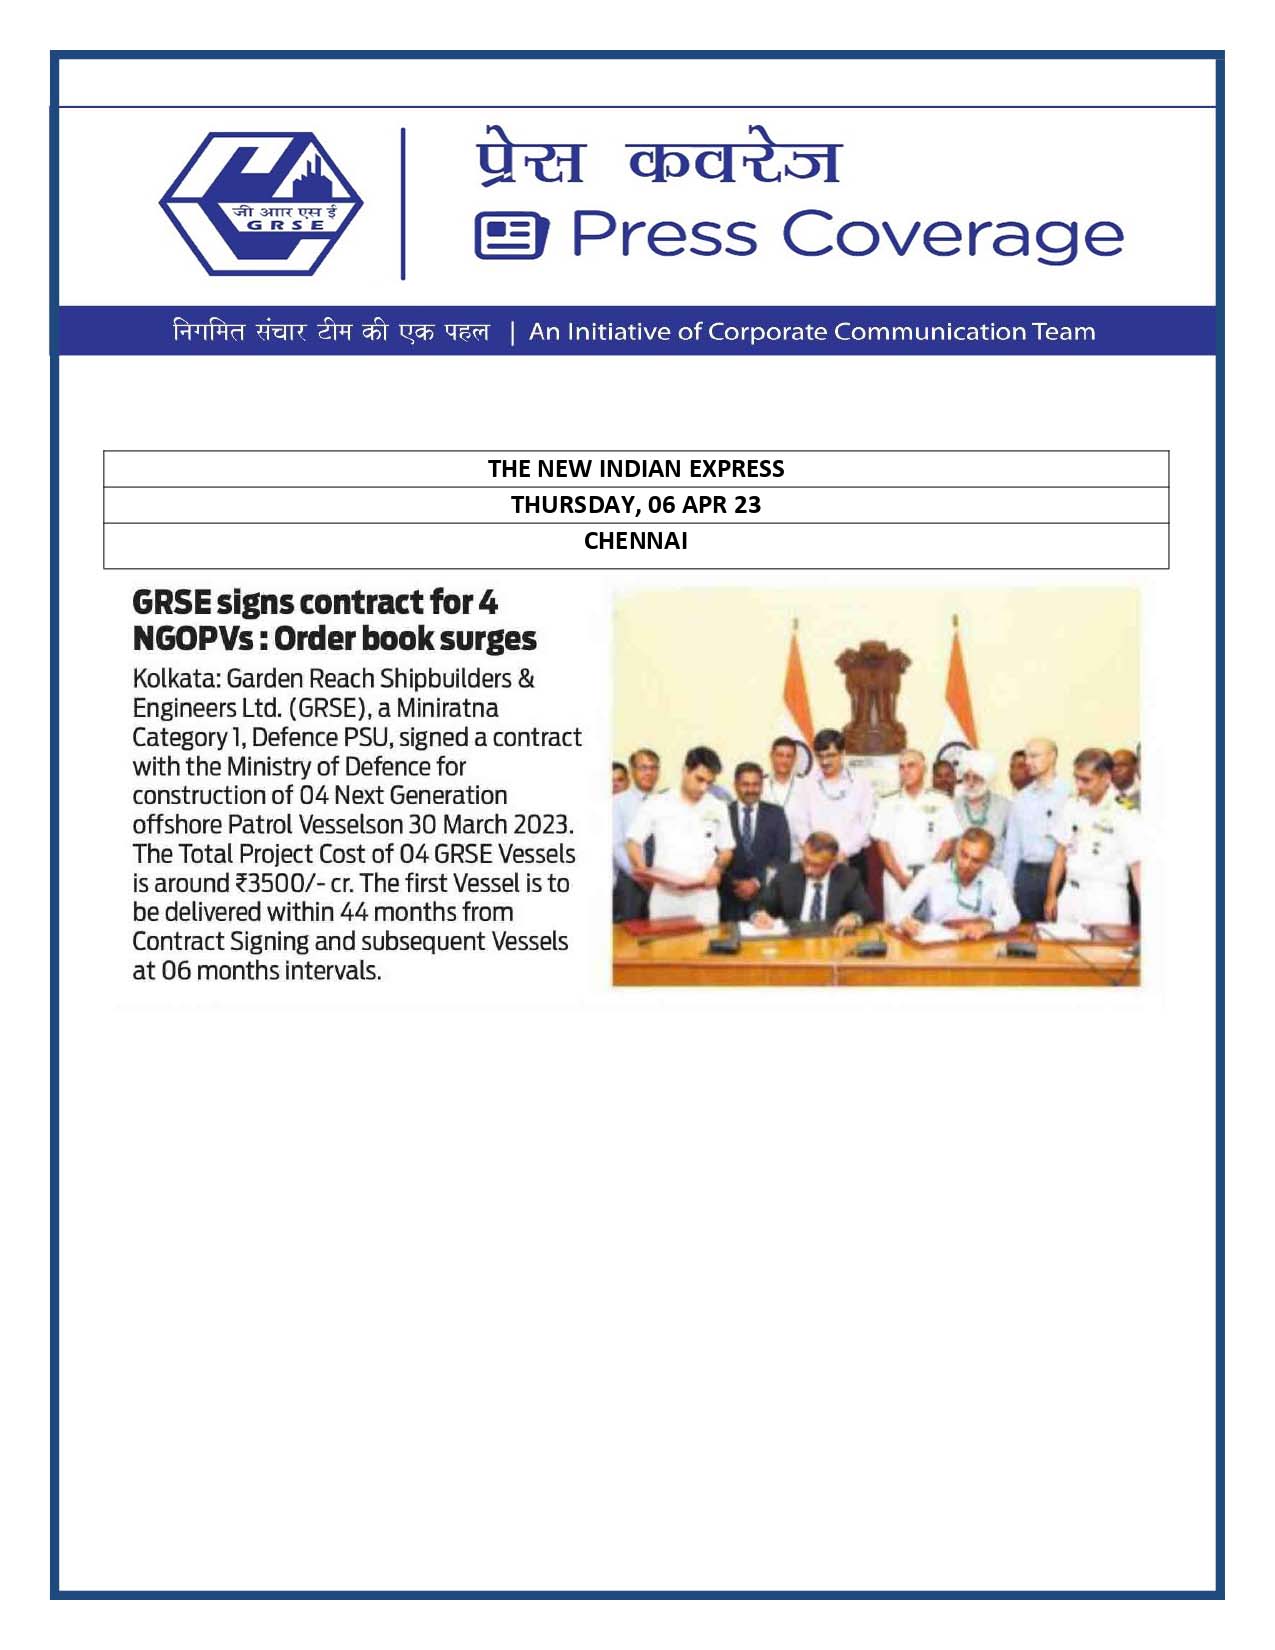 New Indian Express 06 Apr 23